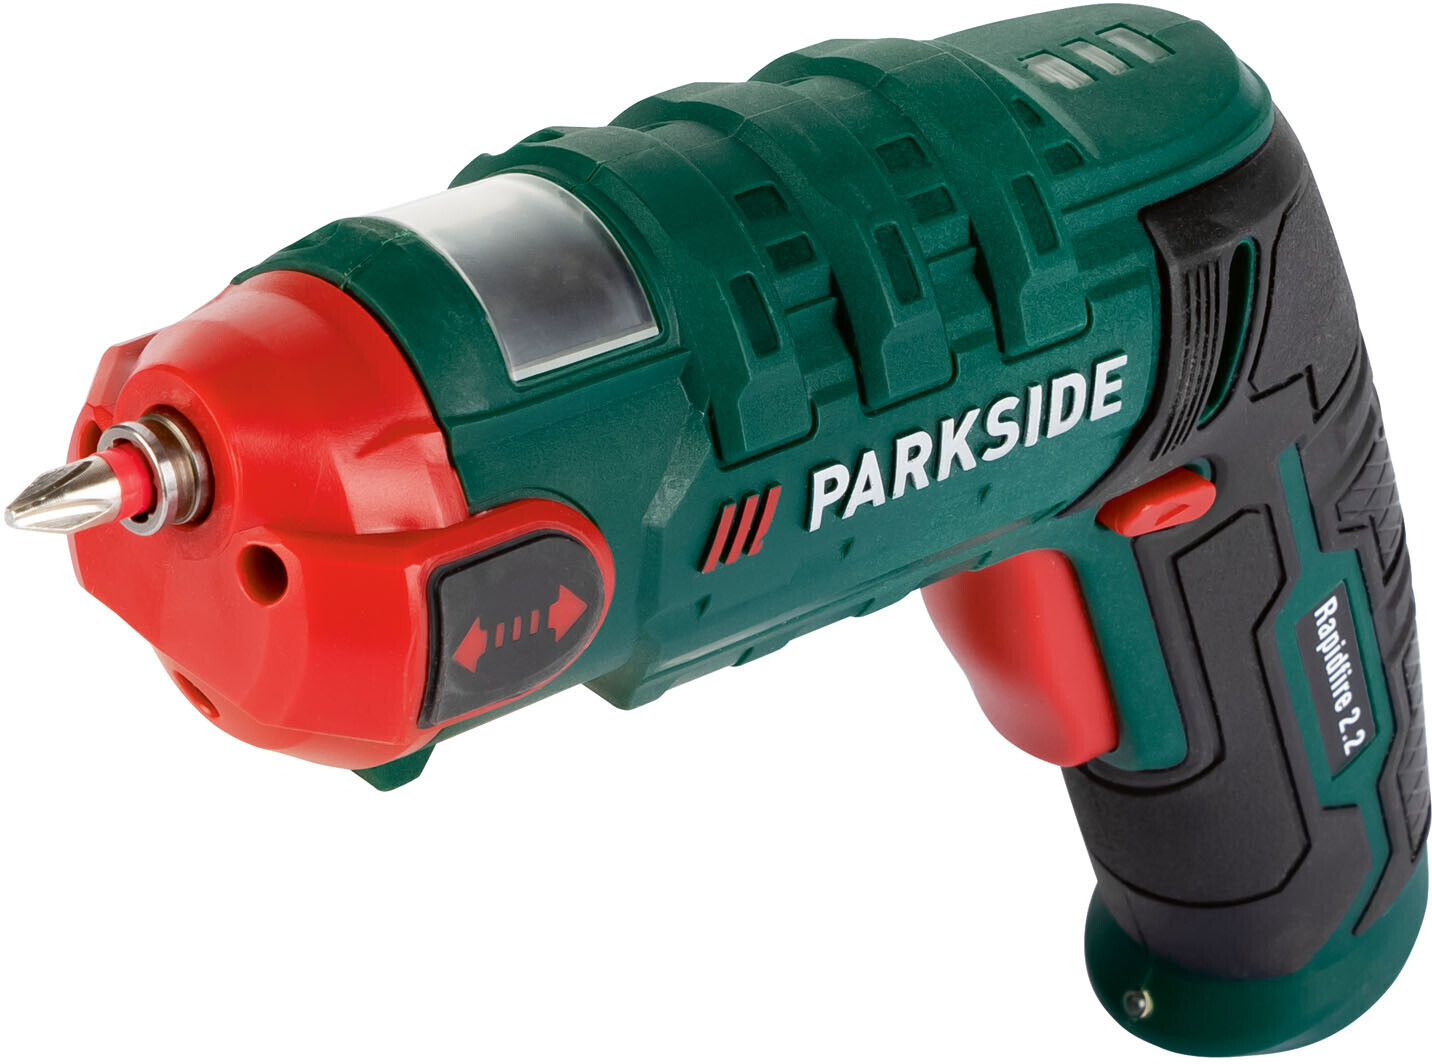 Parkside Rapidfire 2.2 ab 24,05 € | Preisvergleich bei